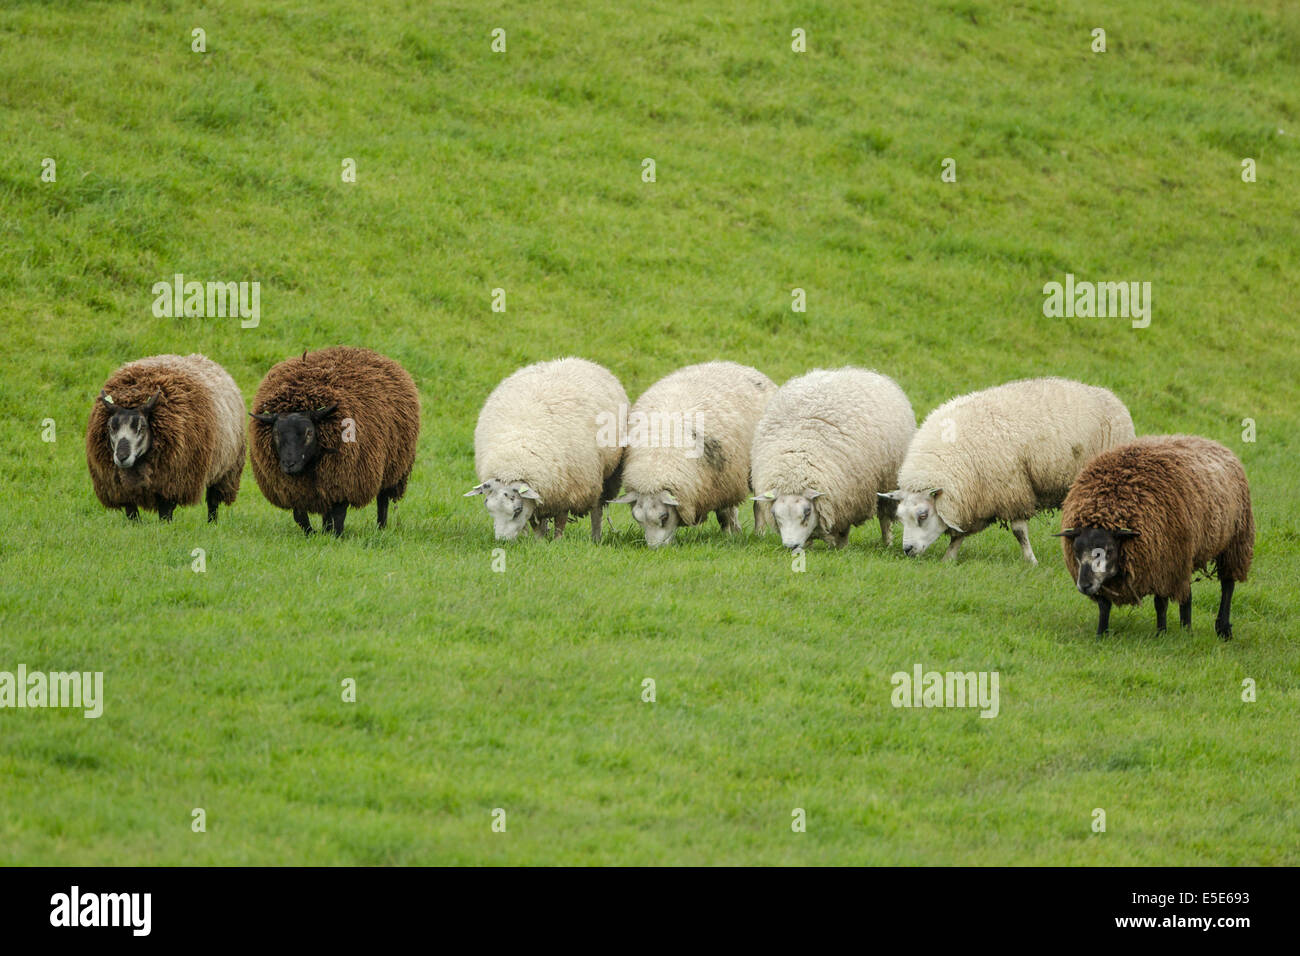 Blue Texel sheep, Stamboek Blauwe Texelaar, grazing among some white Texel sheep, May Stock Photo